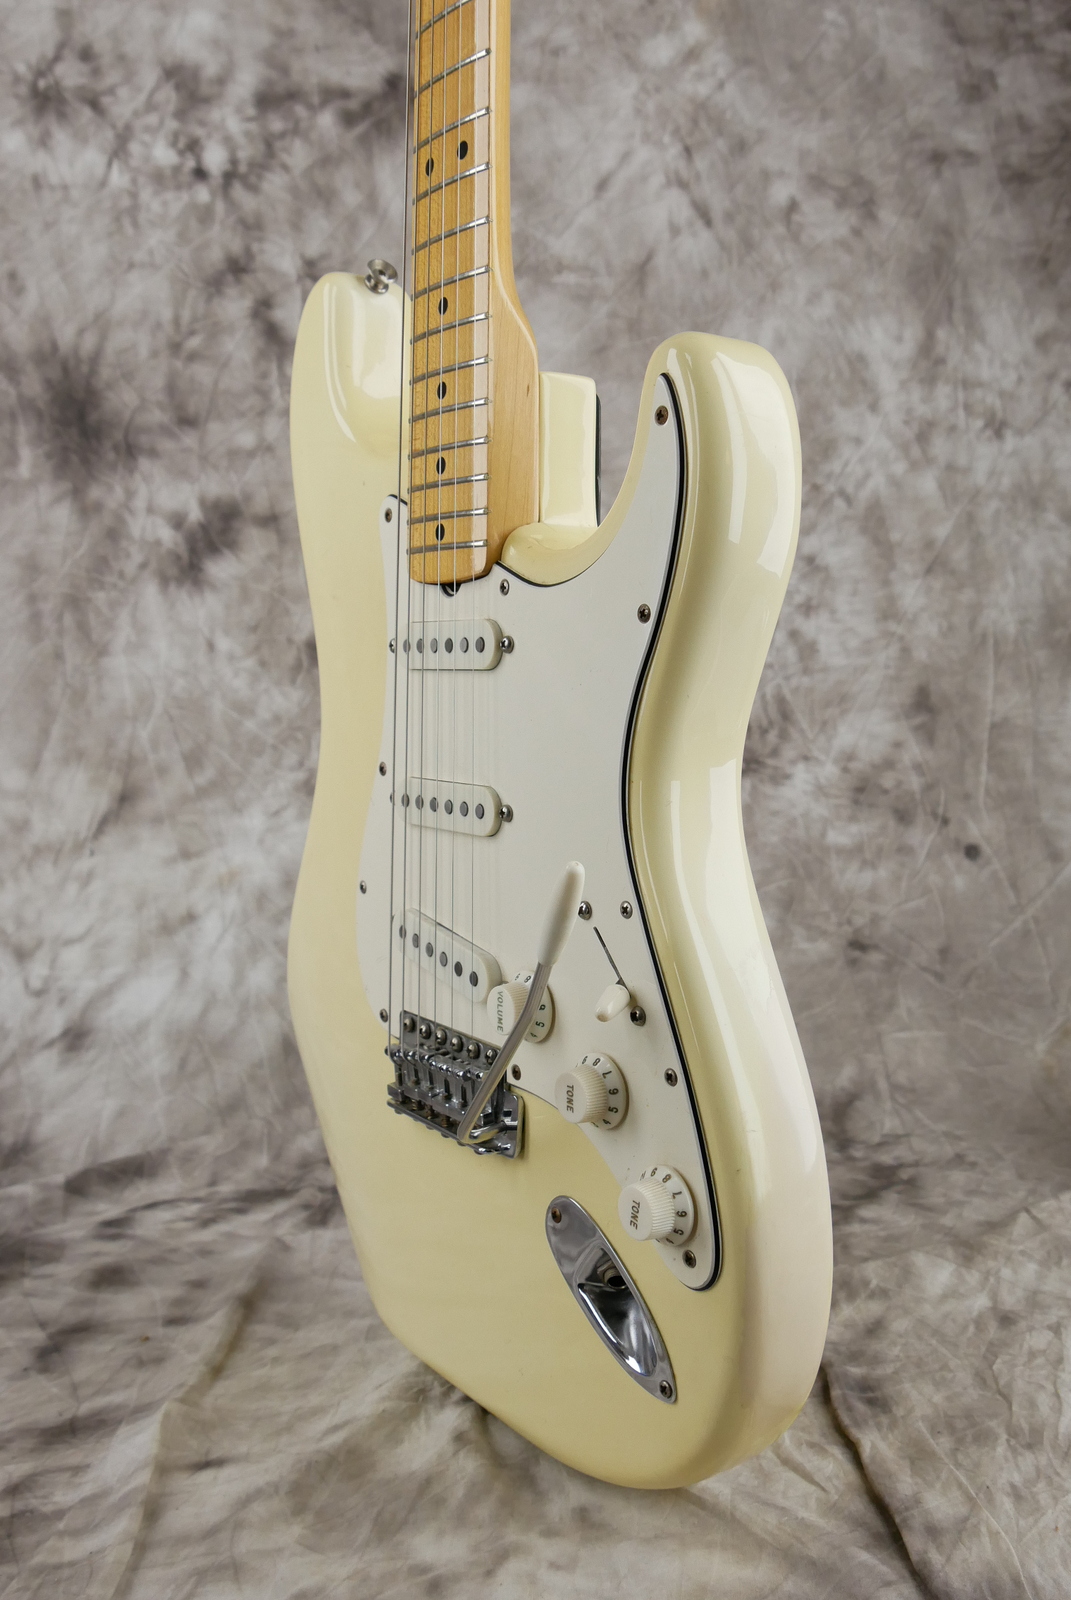 img/vintage/5303/Fender_Stratocaster_Dan_smith_1982_tremolo_hardcase-006.JPG